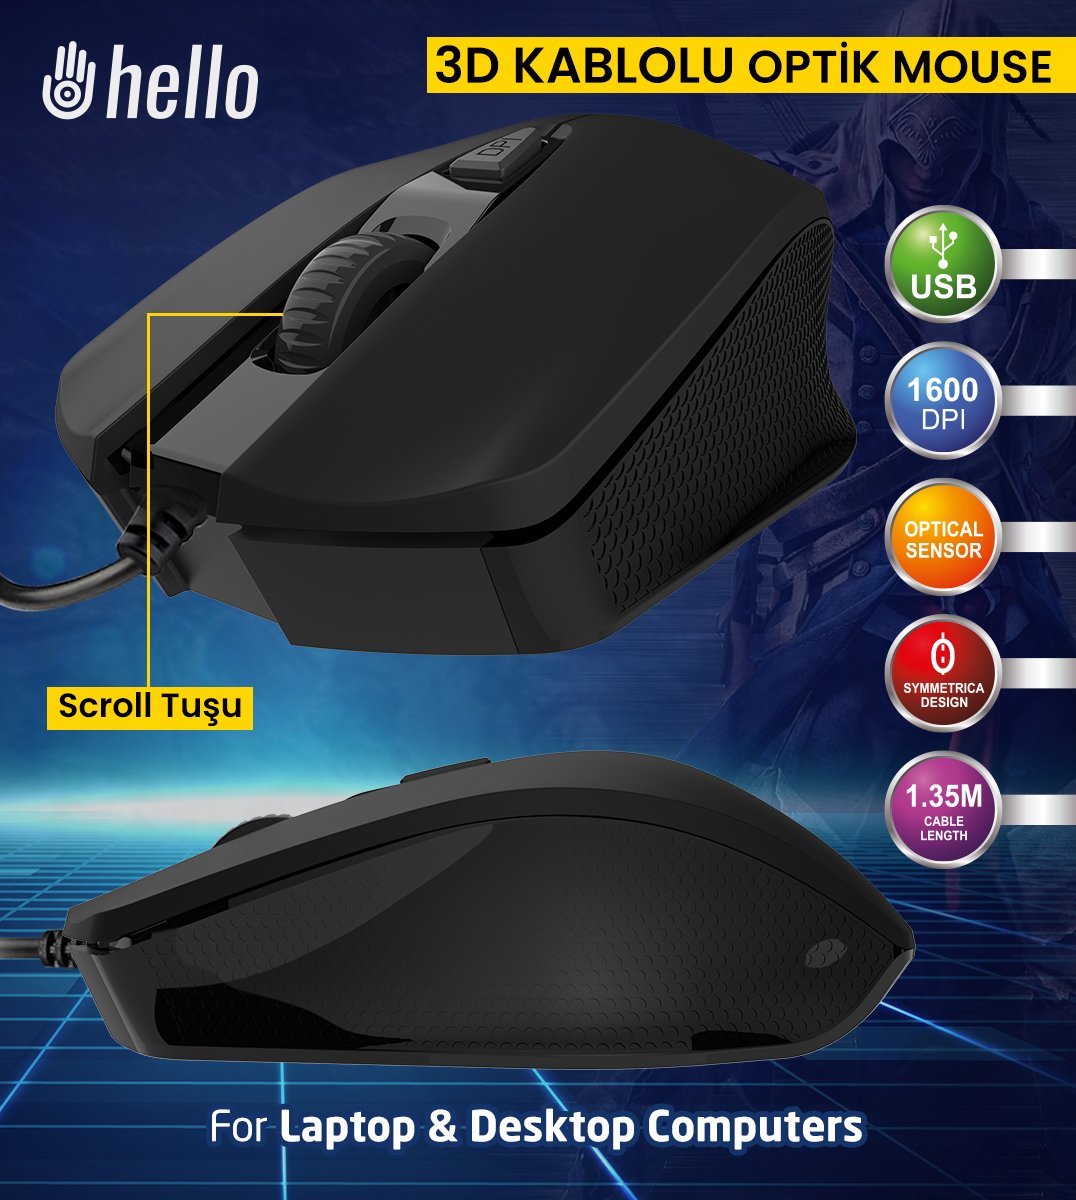 Hello HL-4626 1600DPI 3D USB Kablolu Optik Oyuncu Mouse